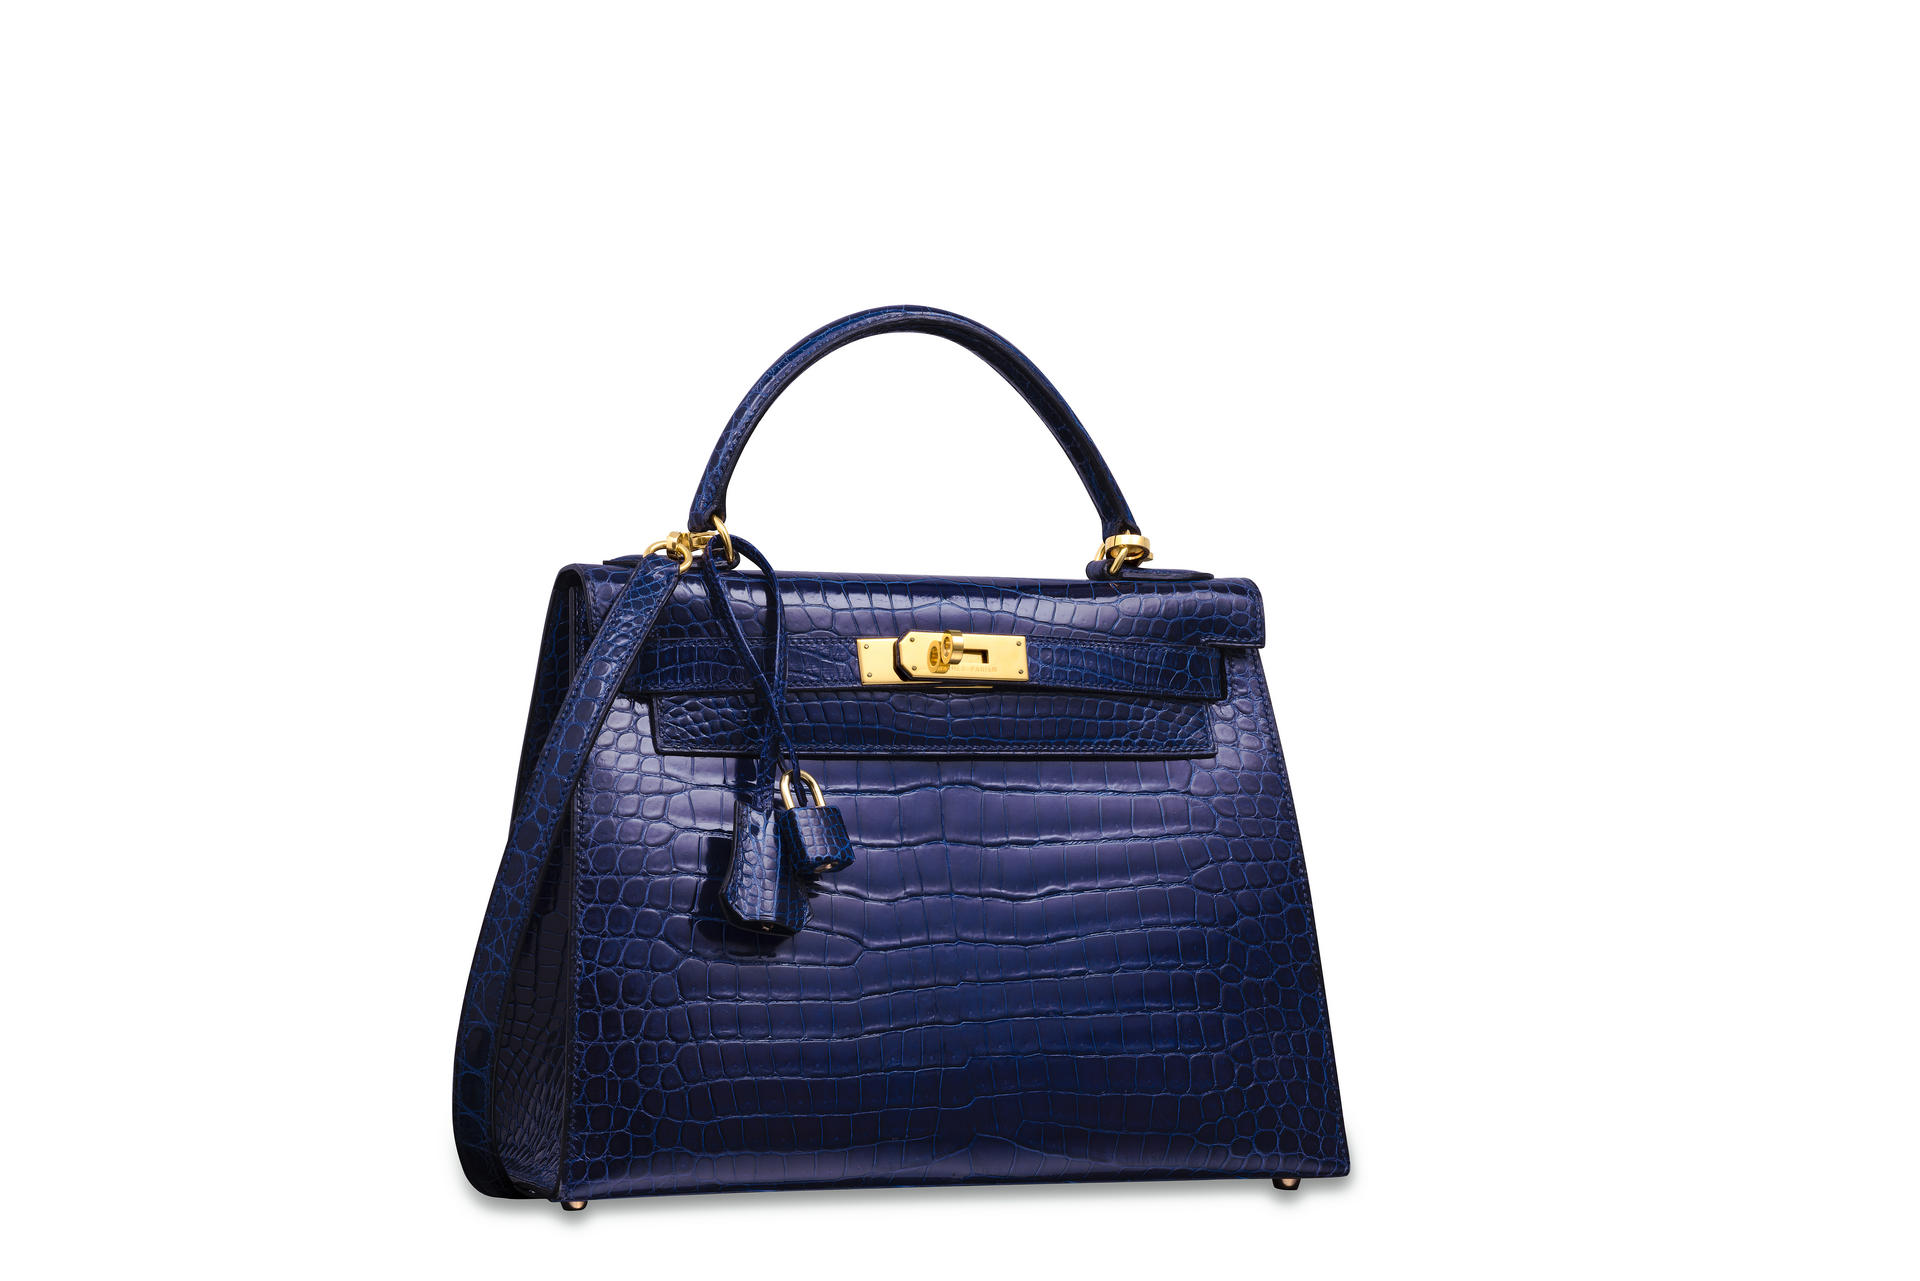 The world's most expensive handbag: an Hermès Birkin bag sells at